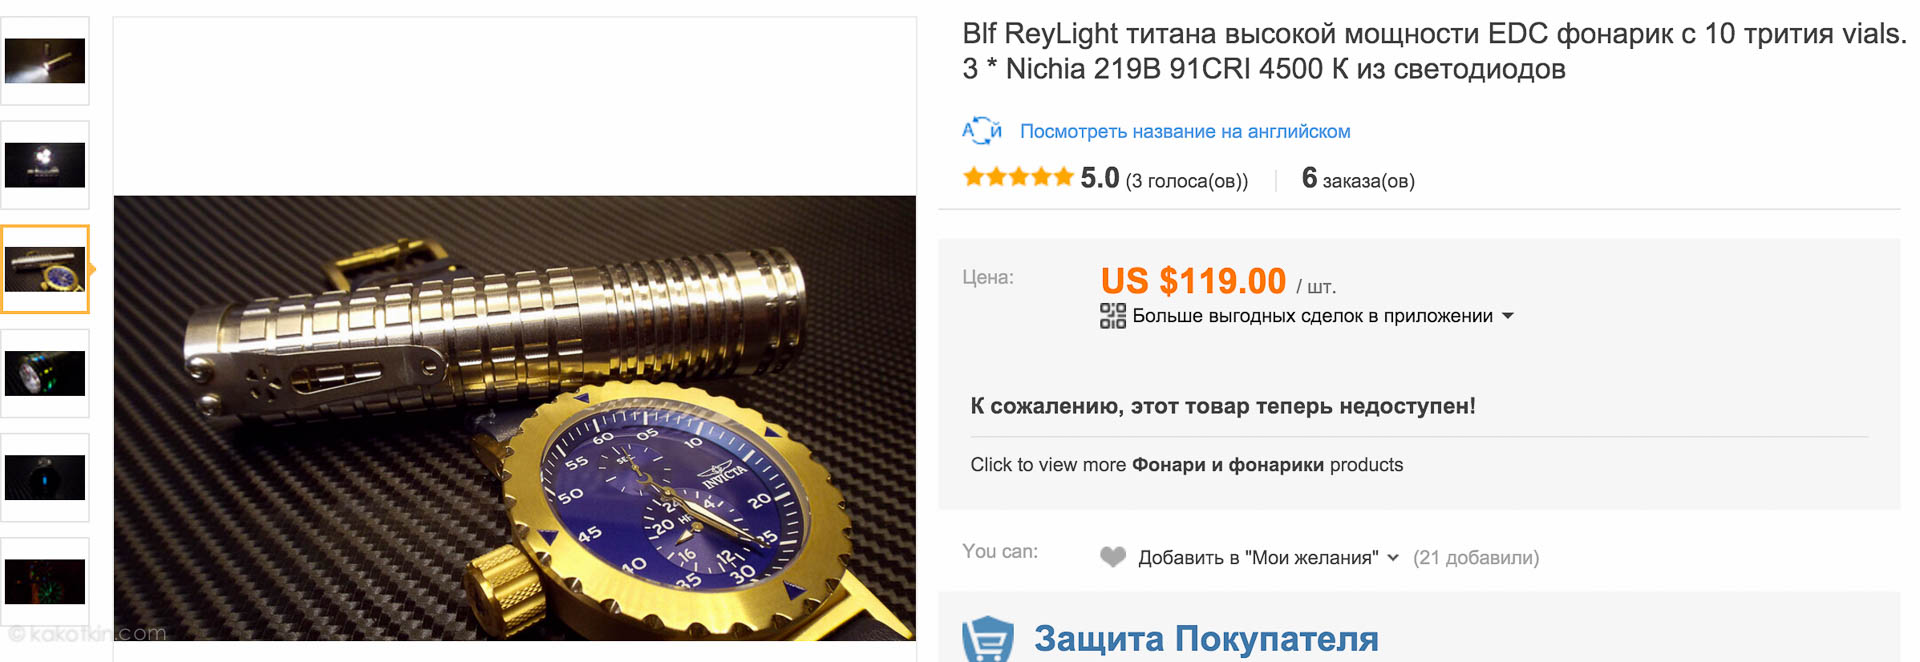 http://ru.aliexpress.com/item/ReyLight-Titanium-high-power-EDC-Flashlight-with-10-Tritium-vials-1020-lumens-3-Nichia-219B-92CRI/32347031019.html?spm=2114.14010208.99999999.324.vEZnEP